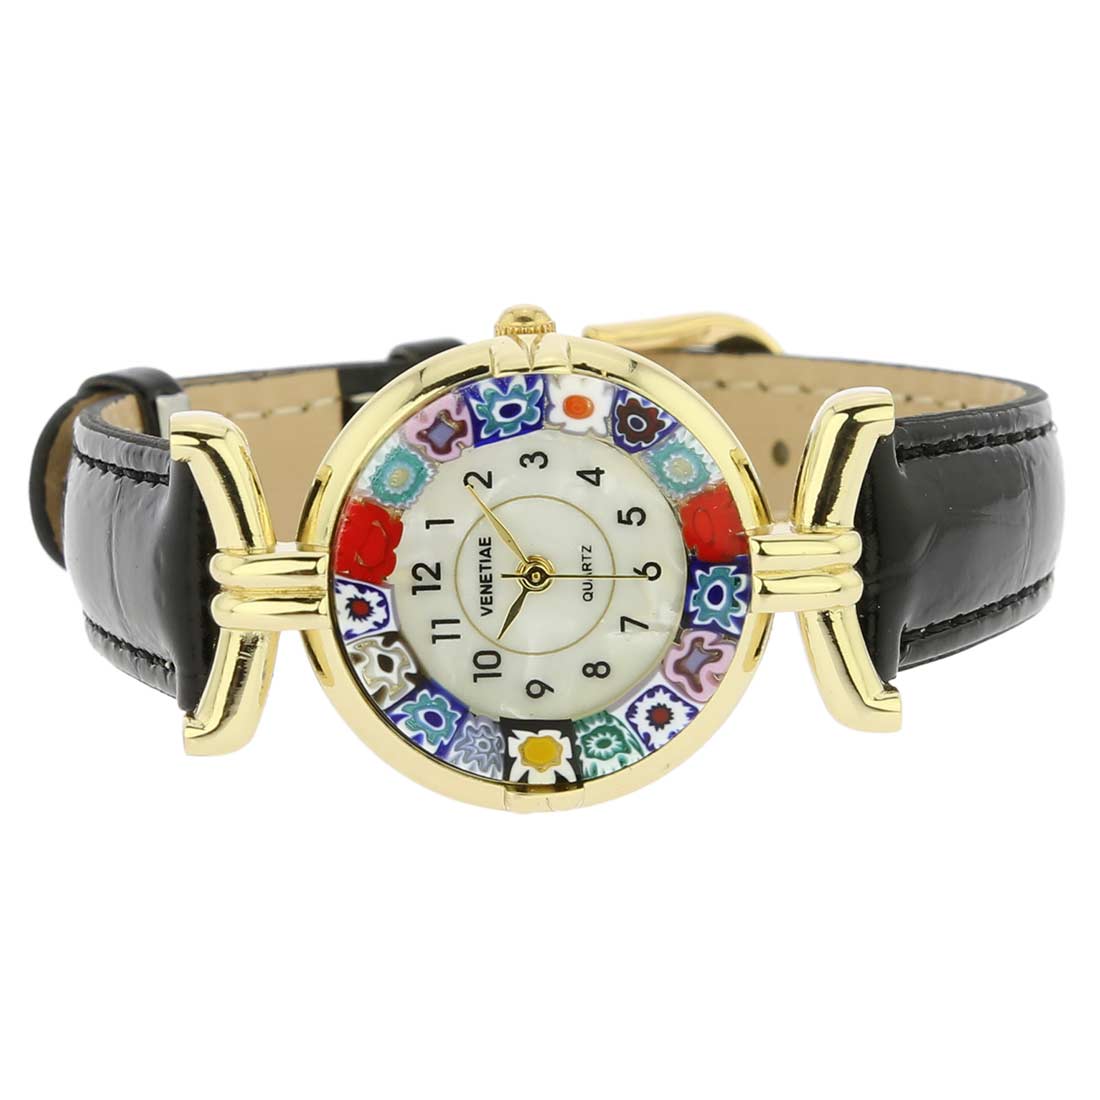 Murano Millefiori Watch With Leather Band - Black Multicolor